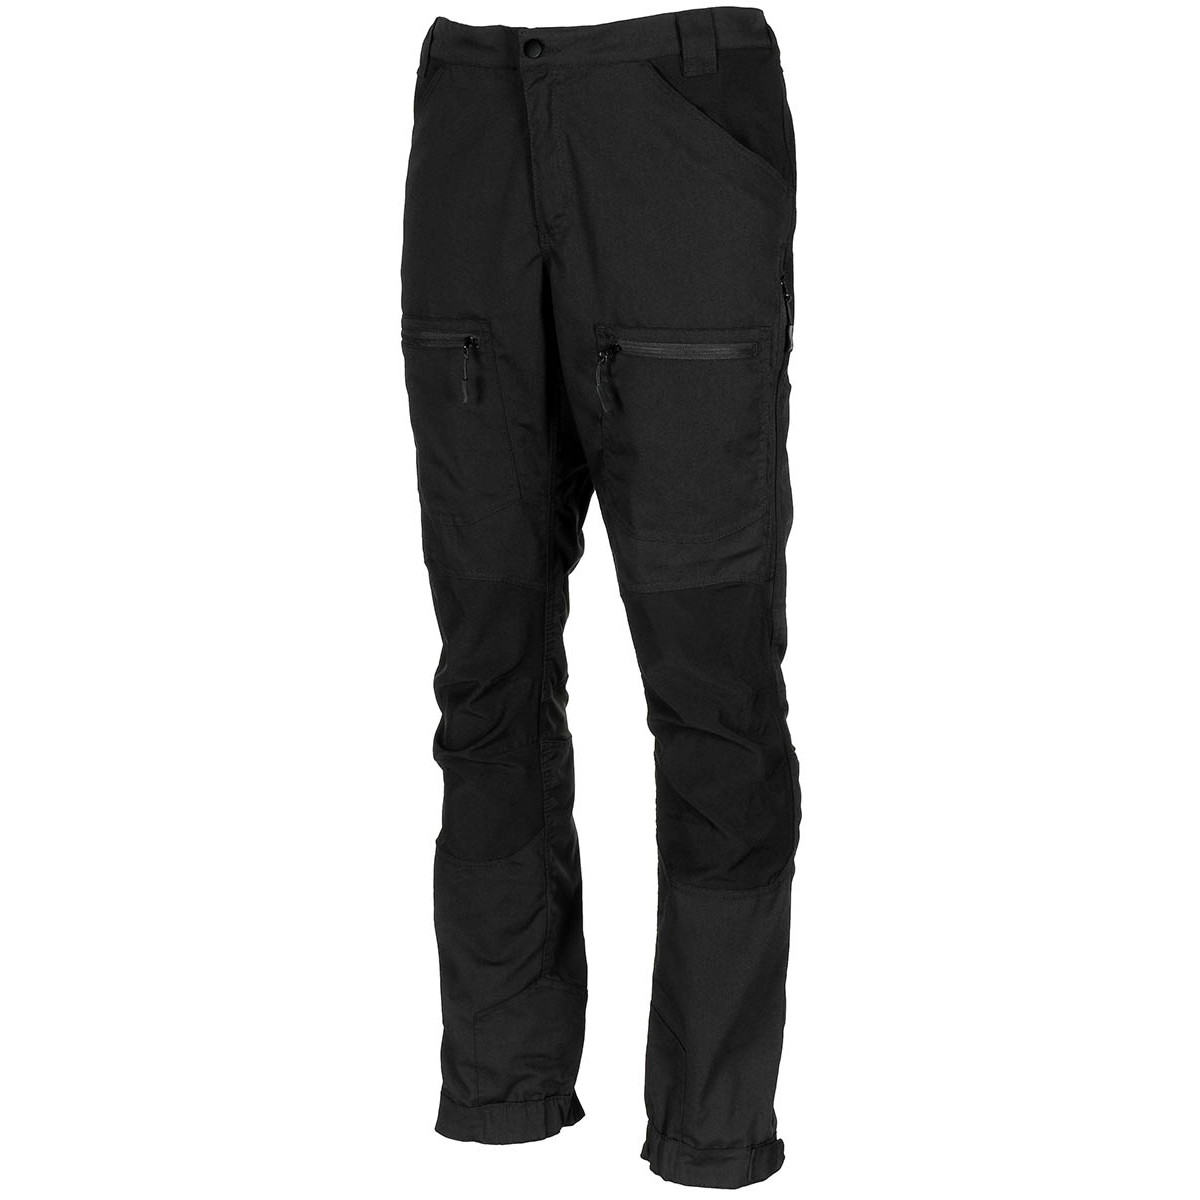 Kalhoty trekingové Fox Expedition - černé, XL